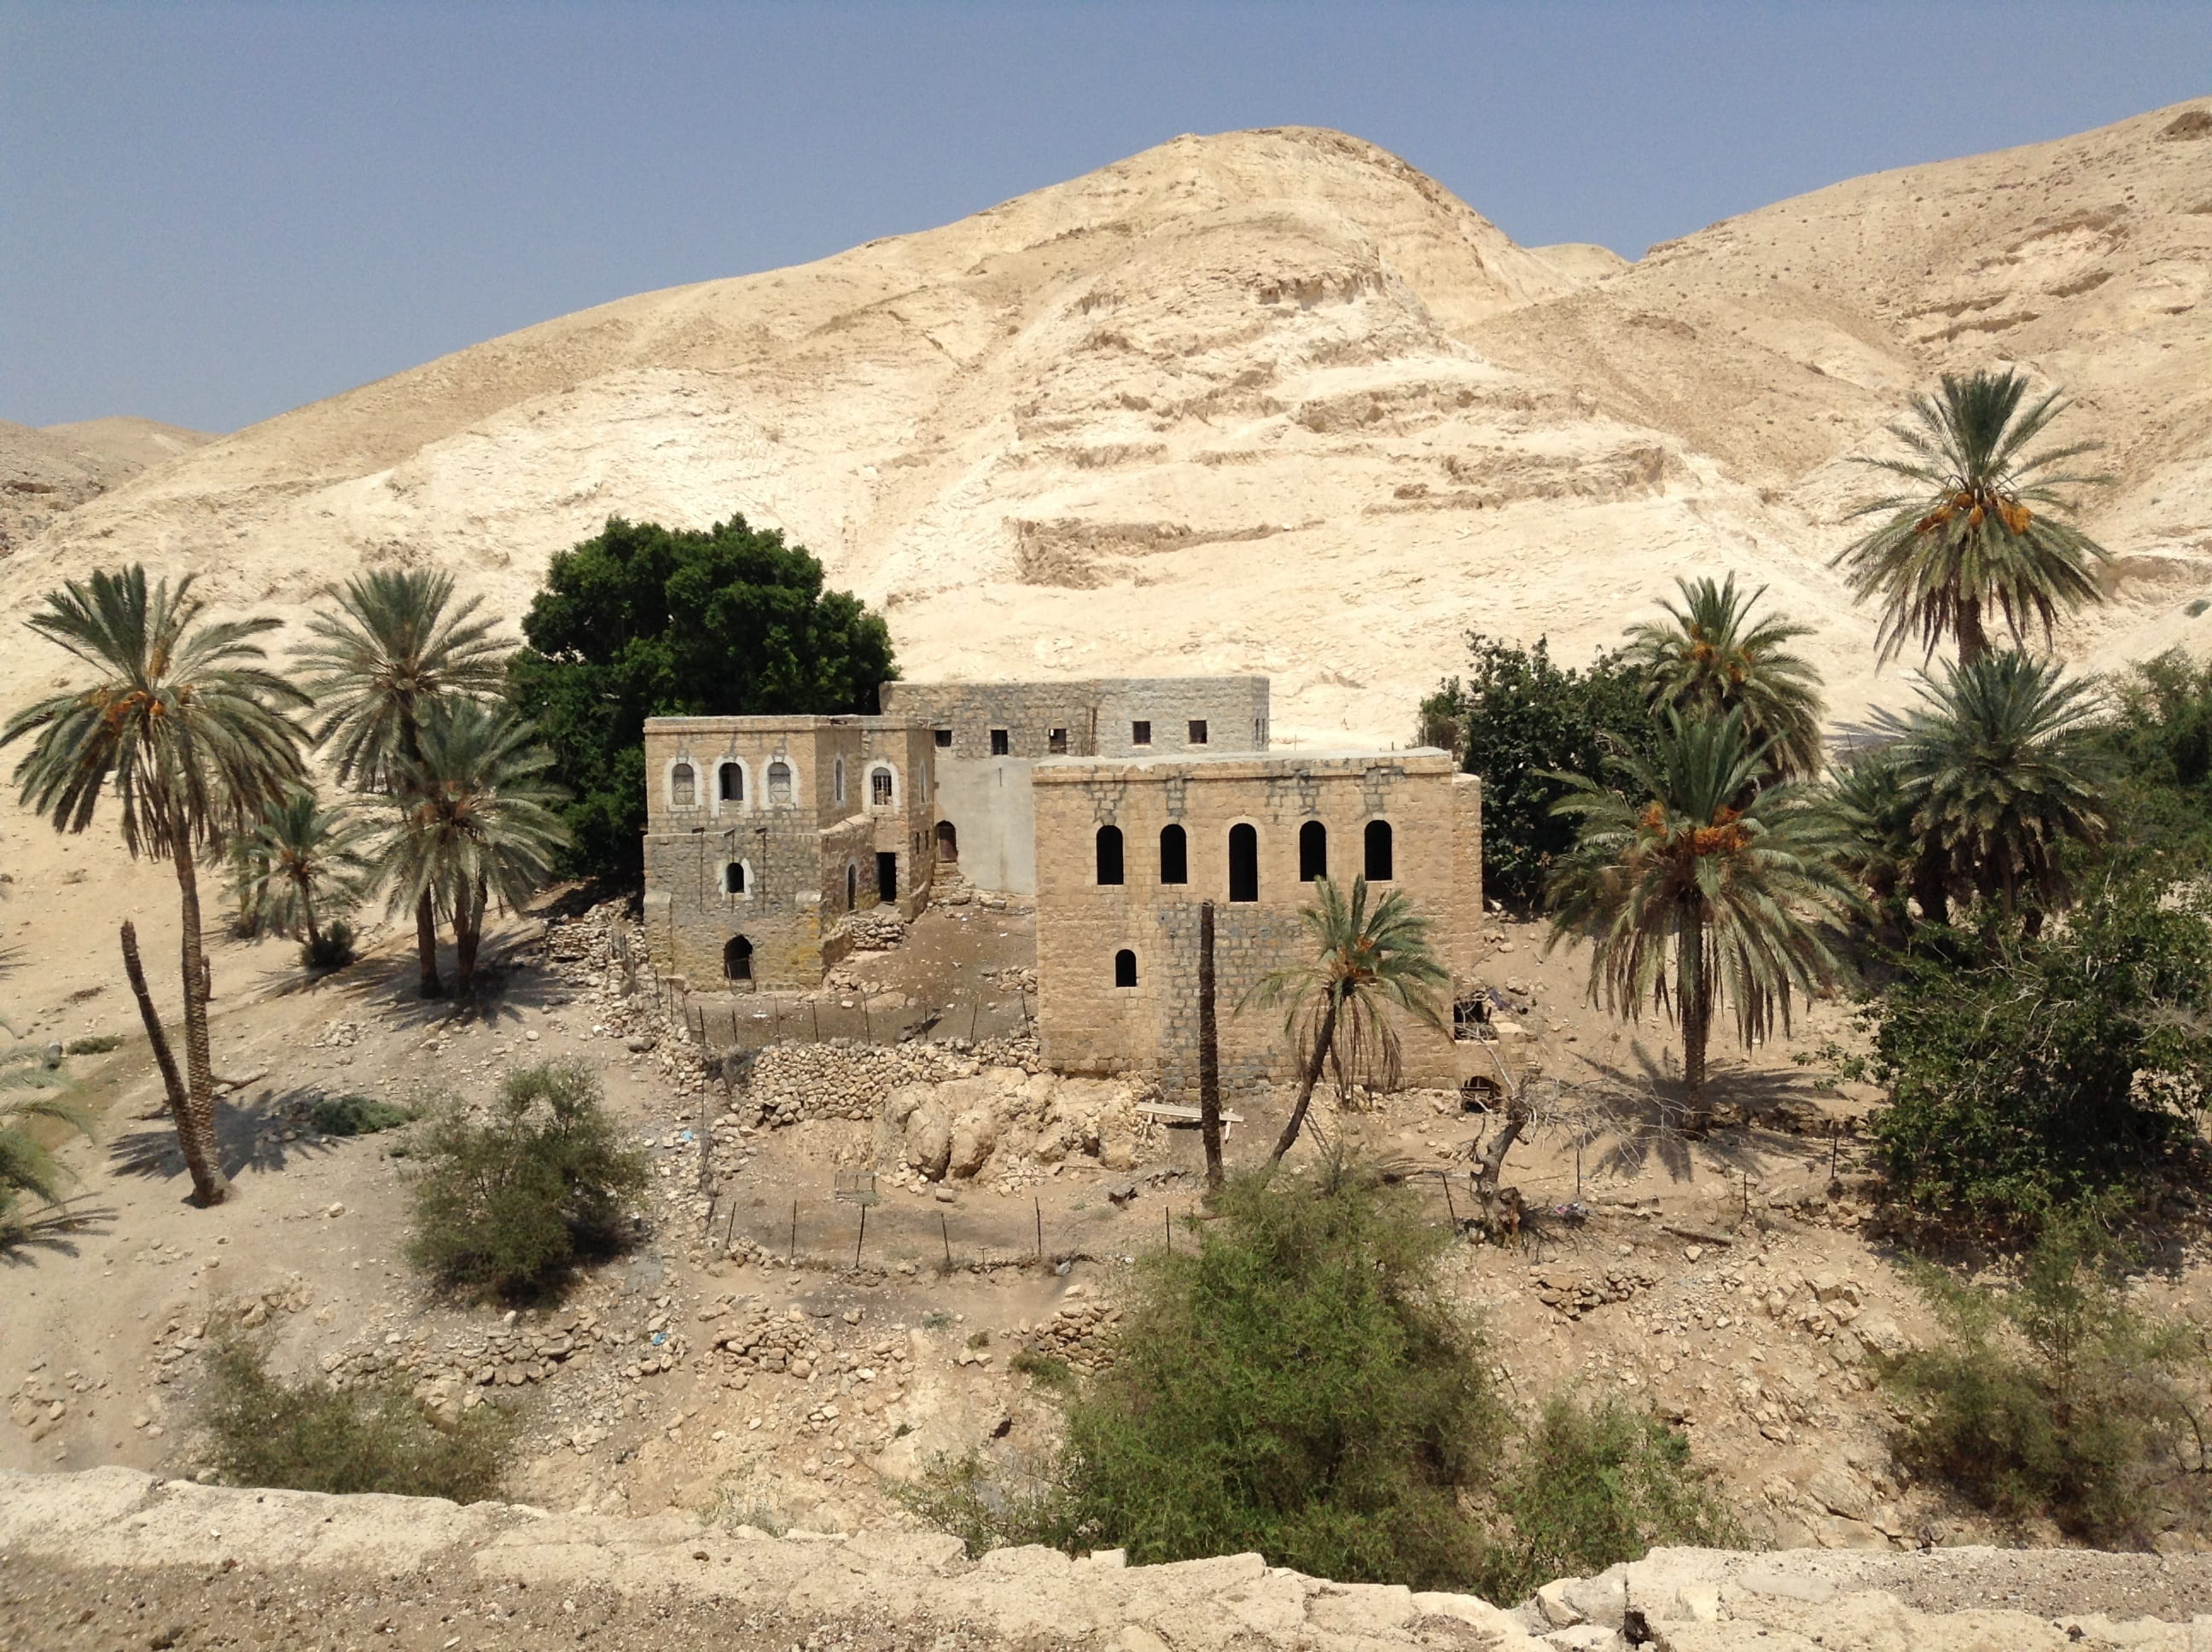 brown stone house beside palm trees, oasis, desert, israel, plant